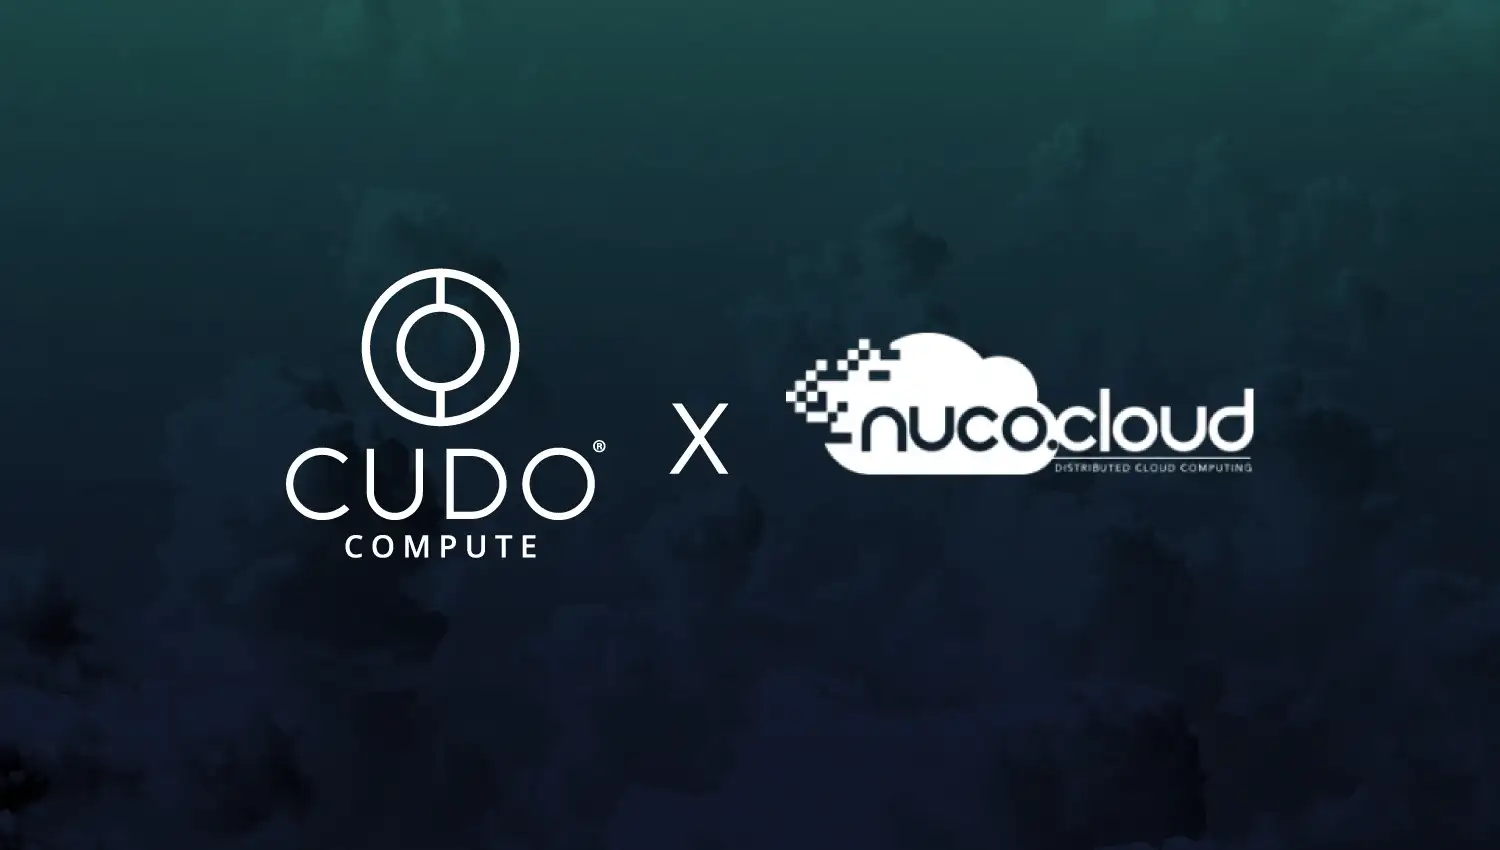 nuco.cloud and Cudo partnership announcement - CUDOS cover photo